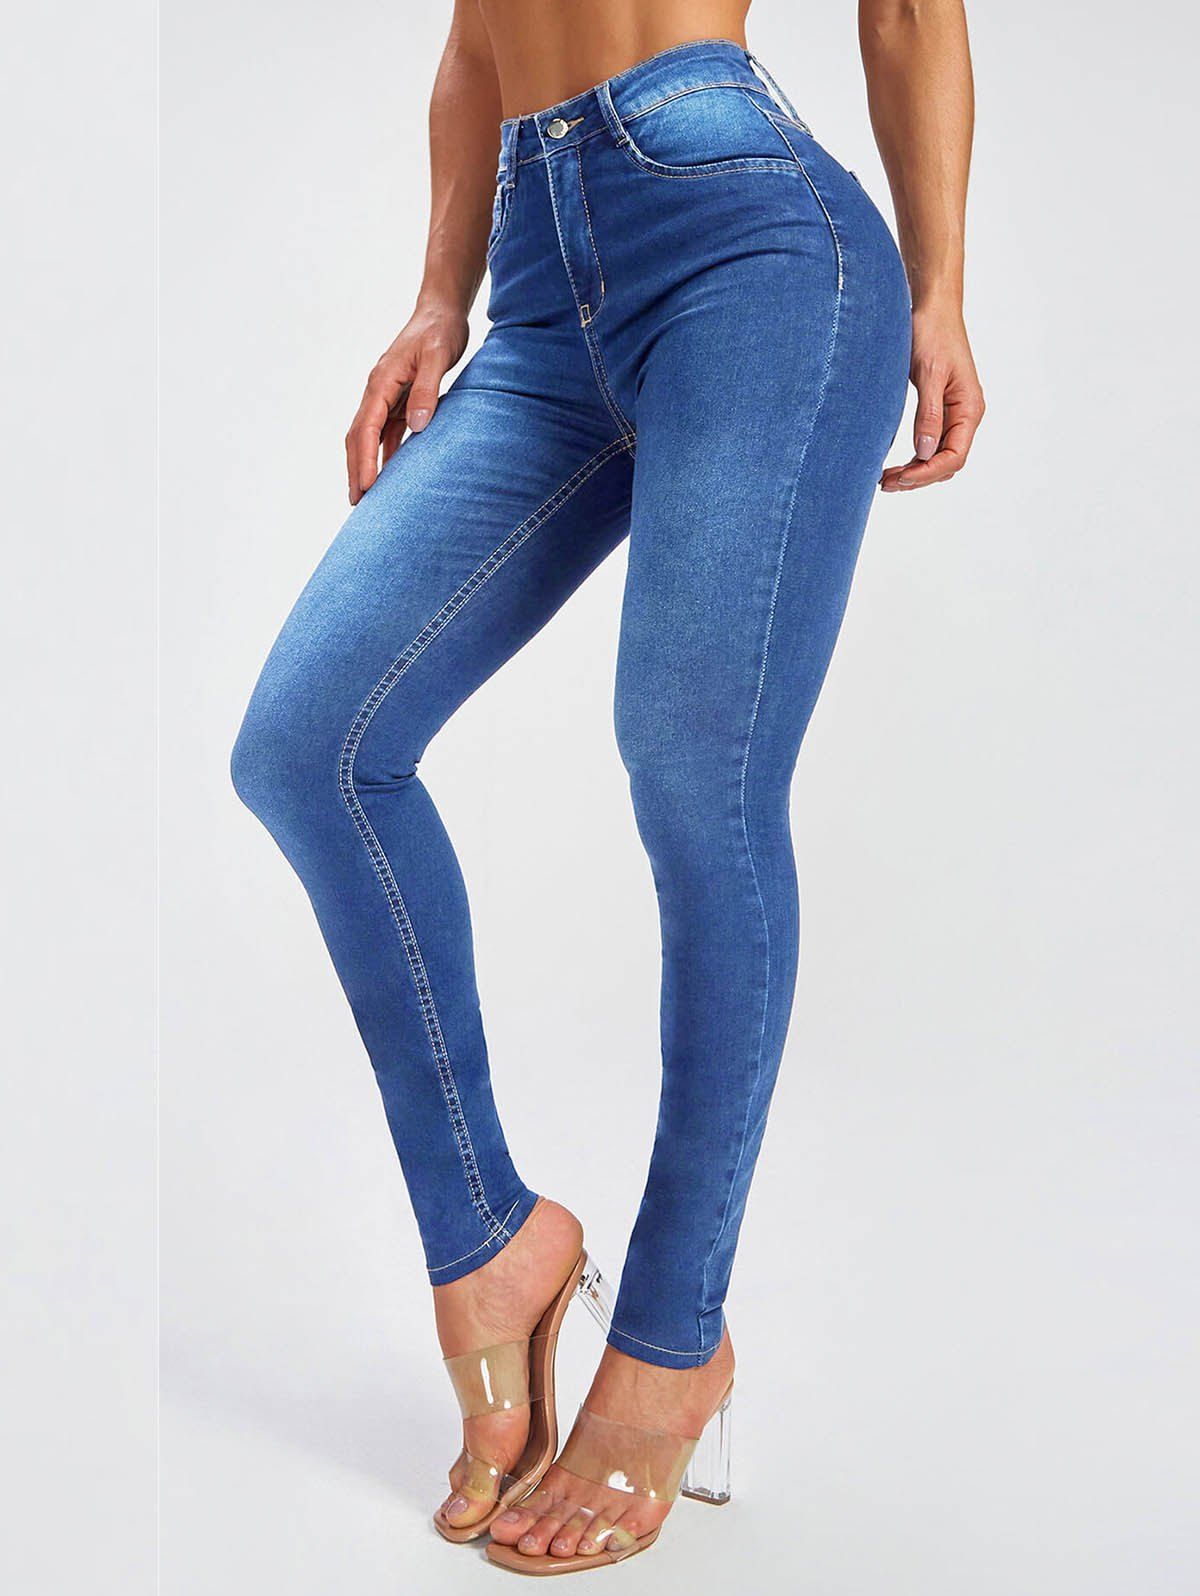 Skinny Jeans High Waisted Zipper Fly Pockets Long Denim Pants - BLUE M